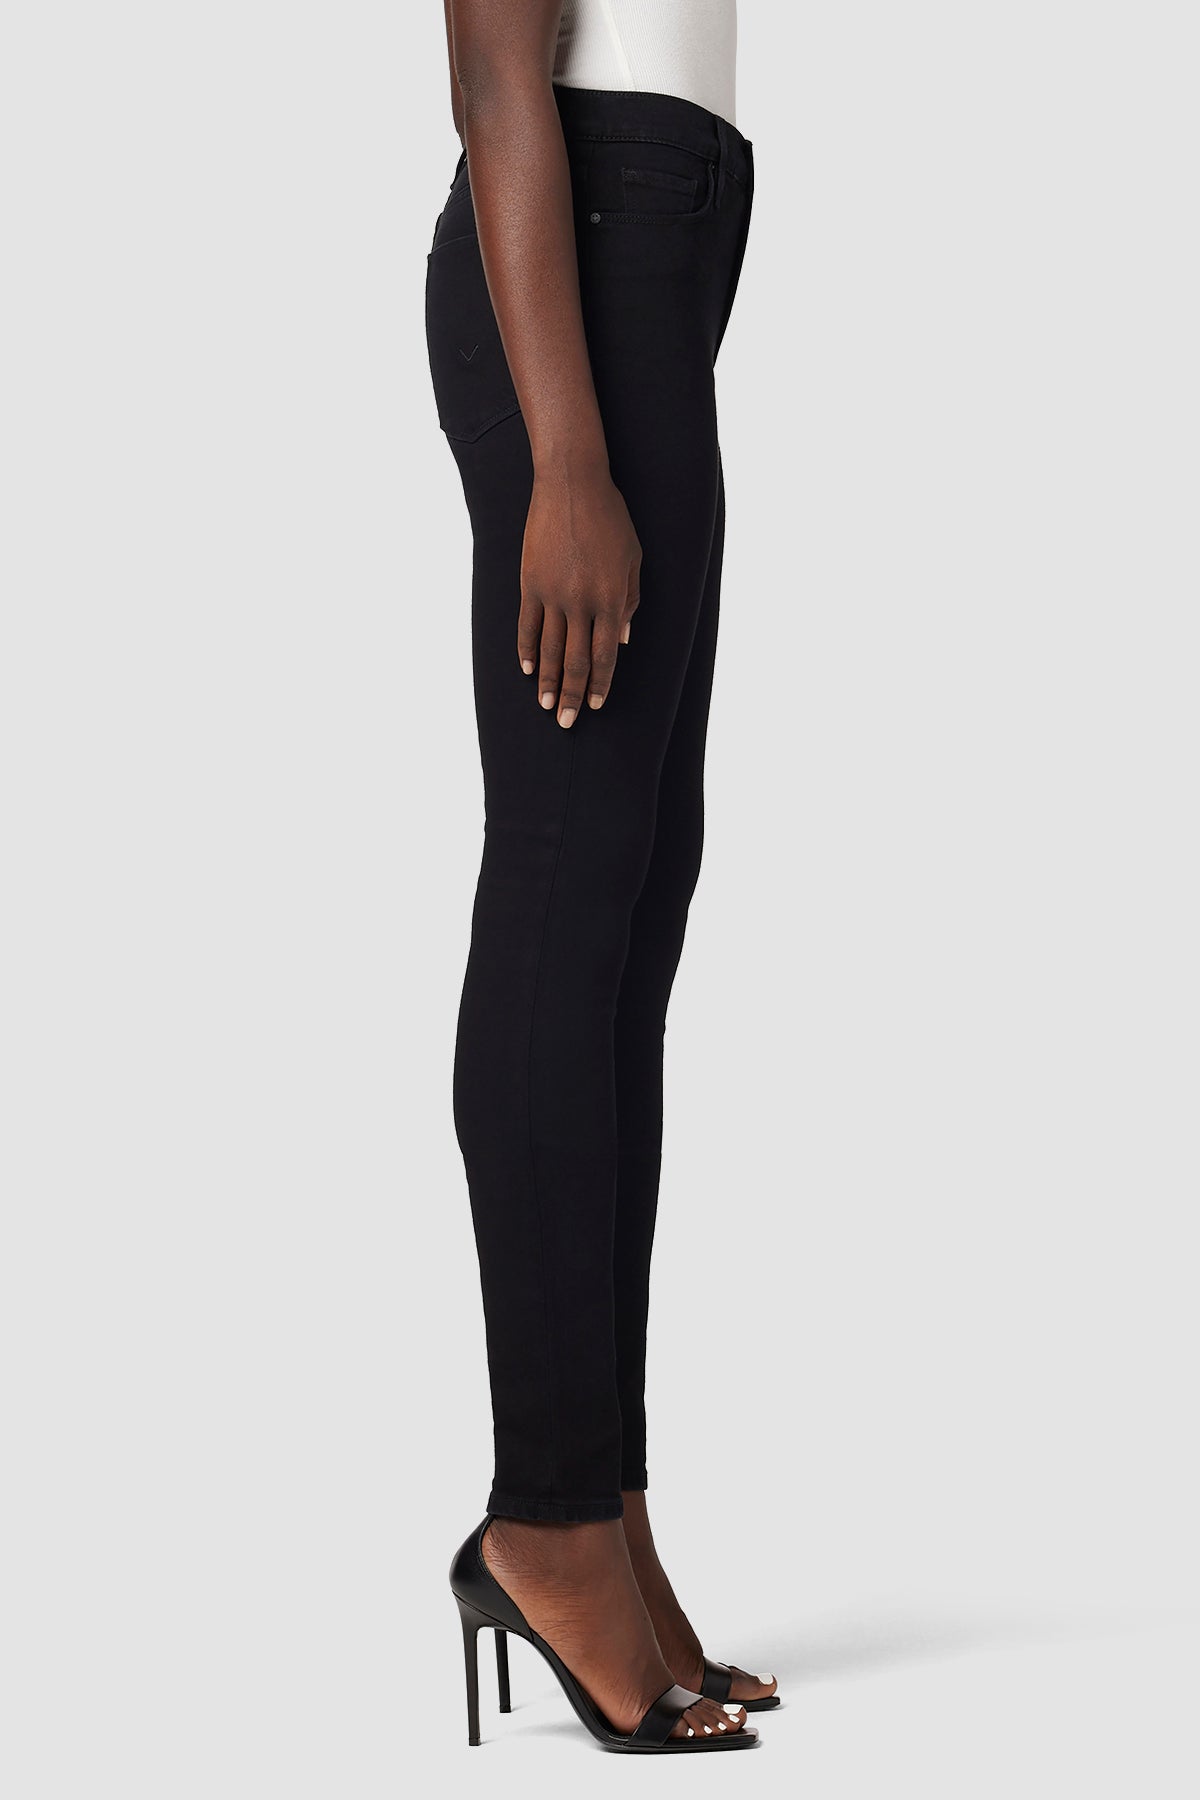 Hudson Jeans Women's Barbara High Rise, Super Skinny, Super Model Long  Length Jean RP REQUIEM 32